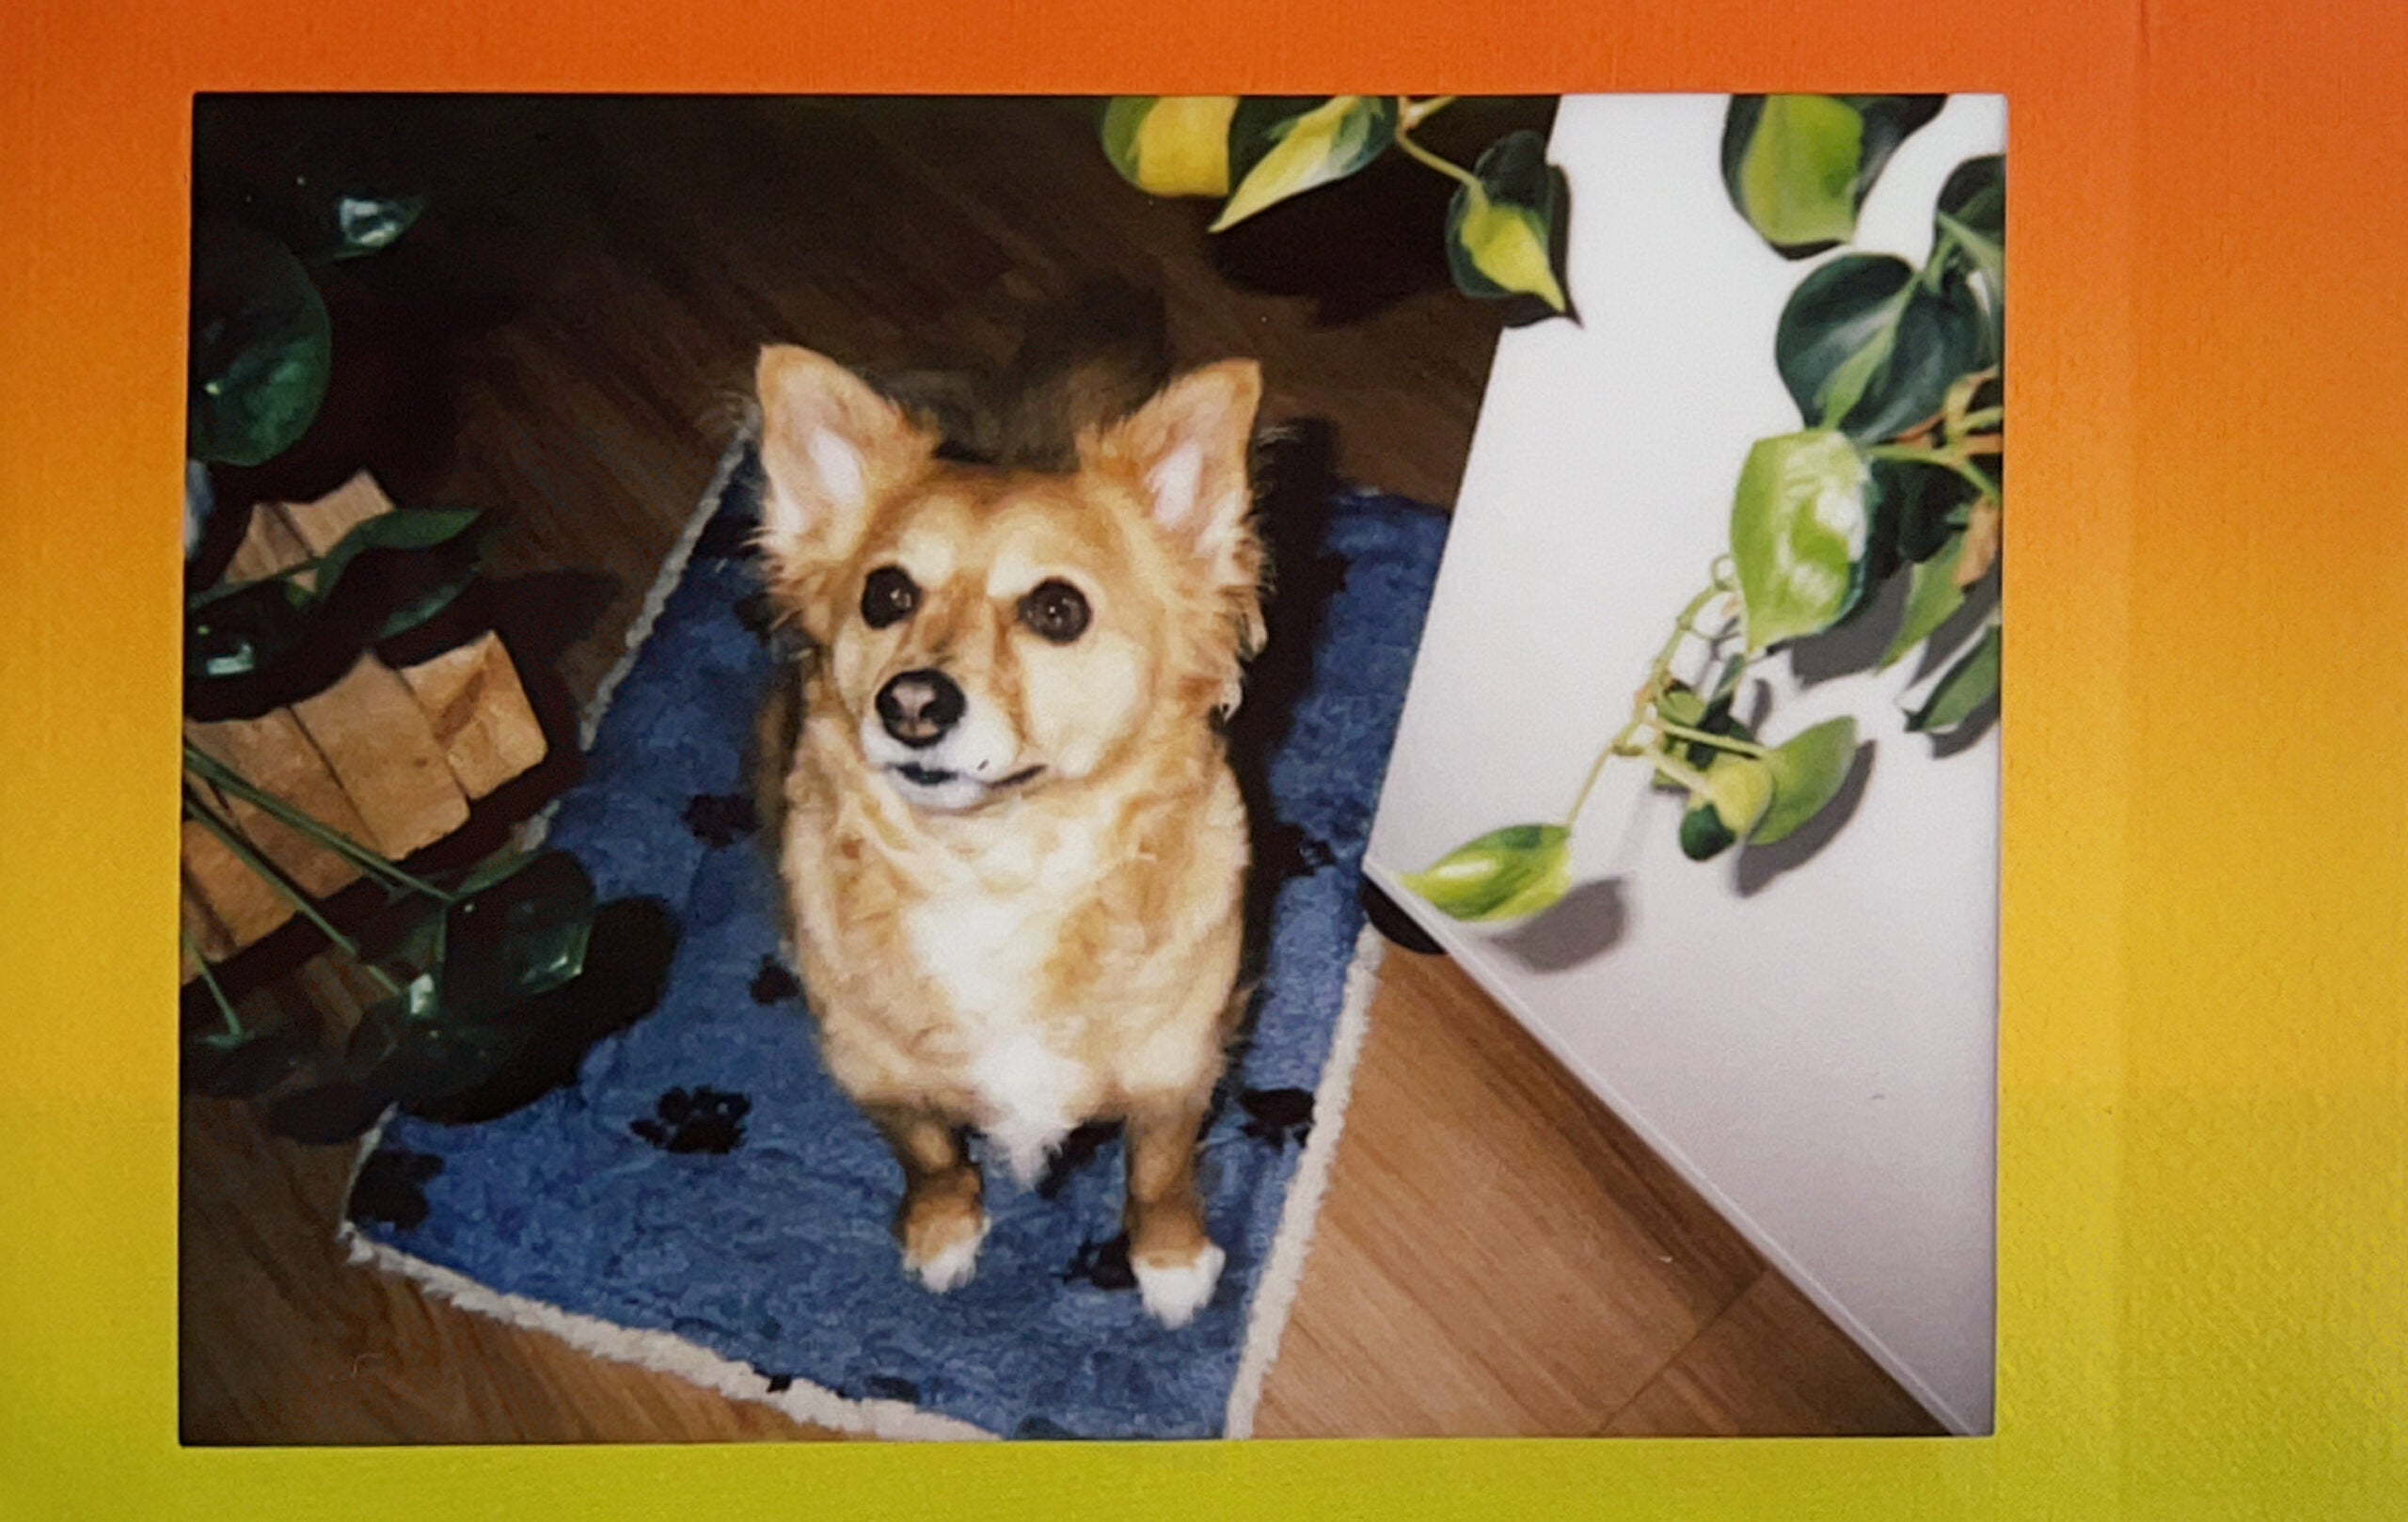 An Instax photo of a cute dog.